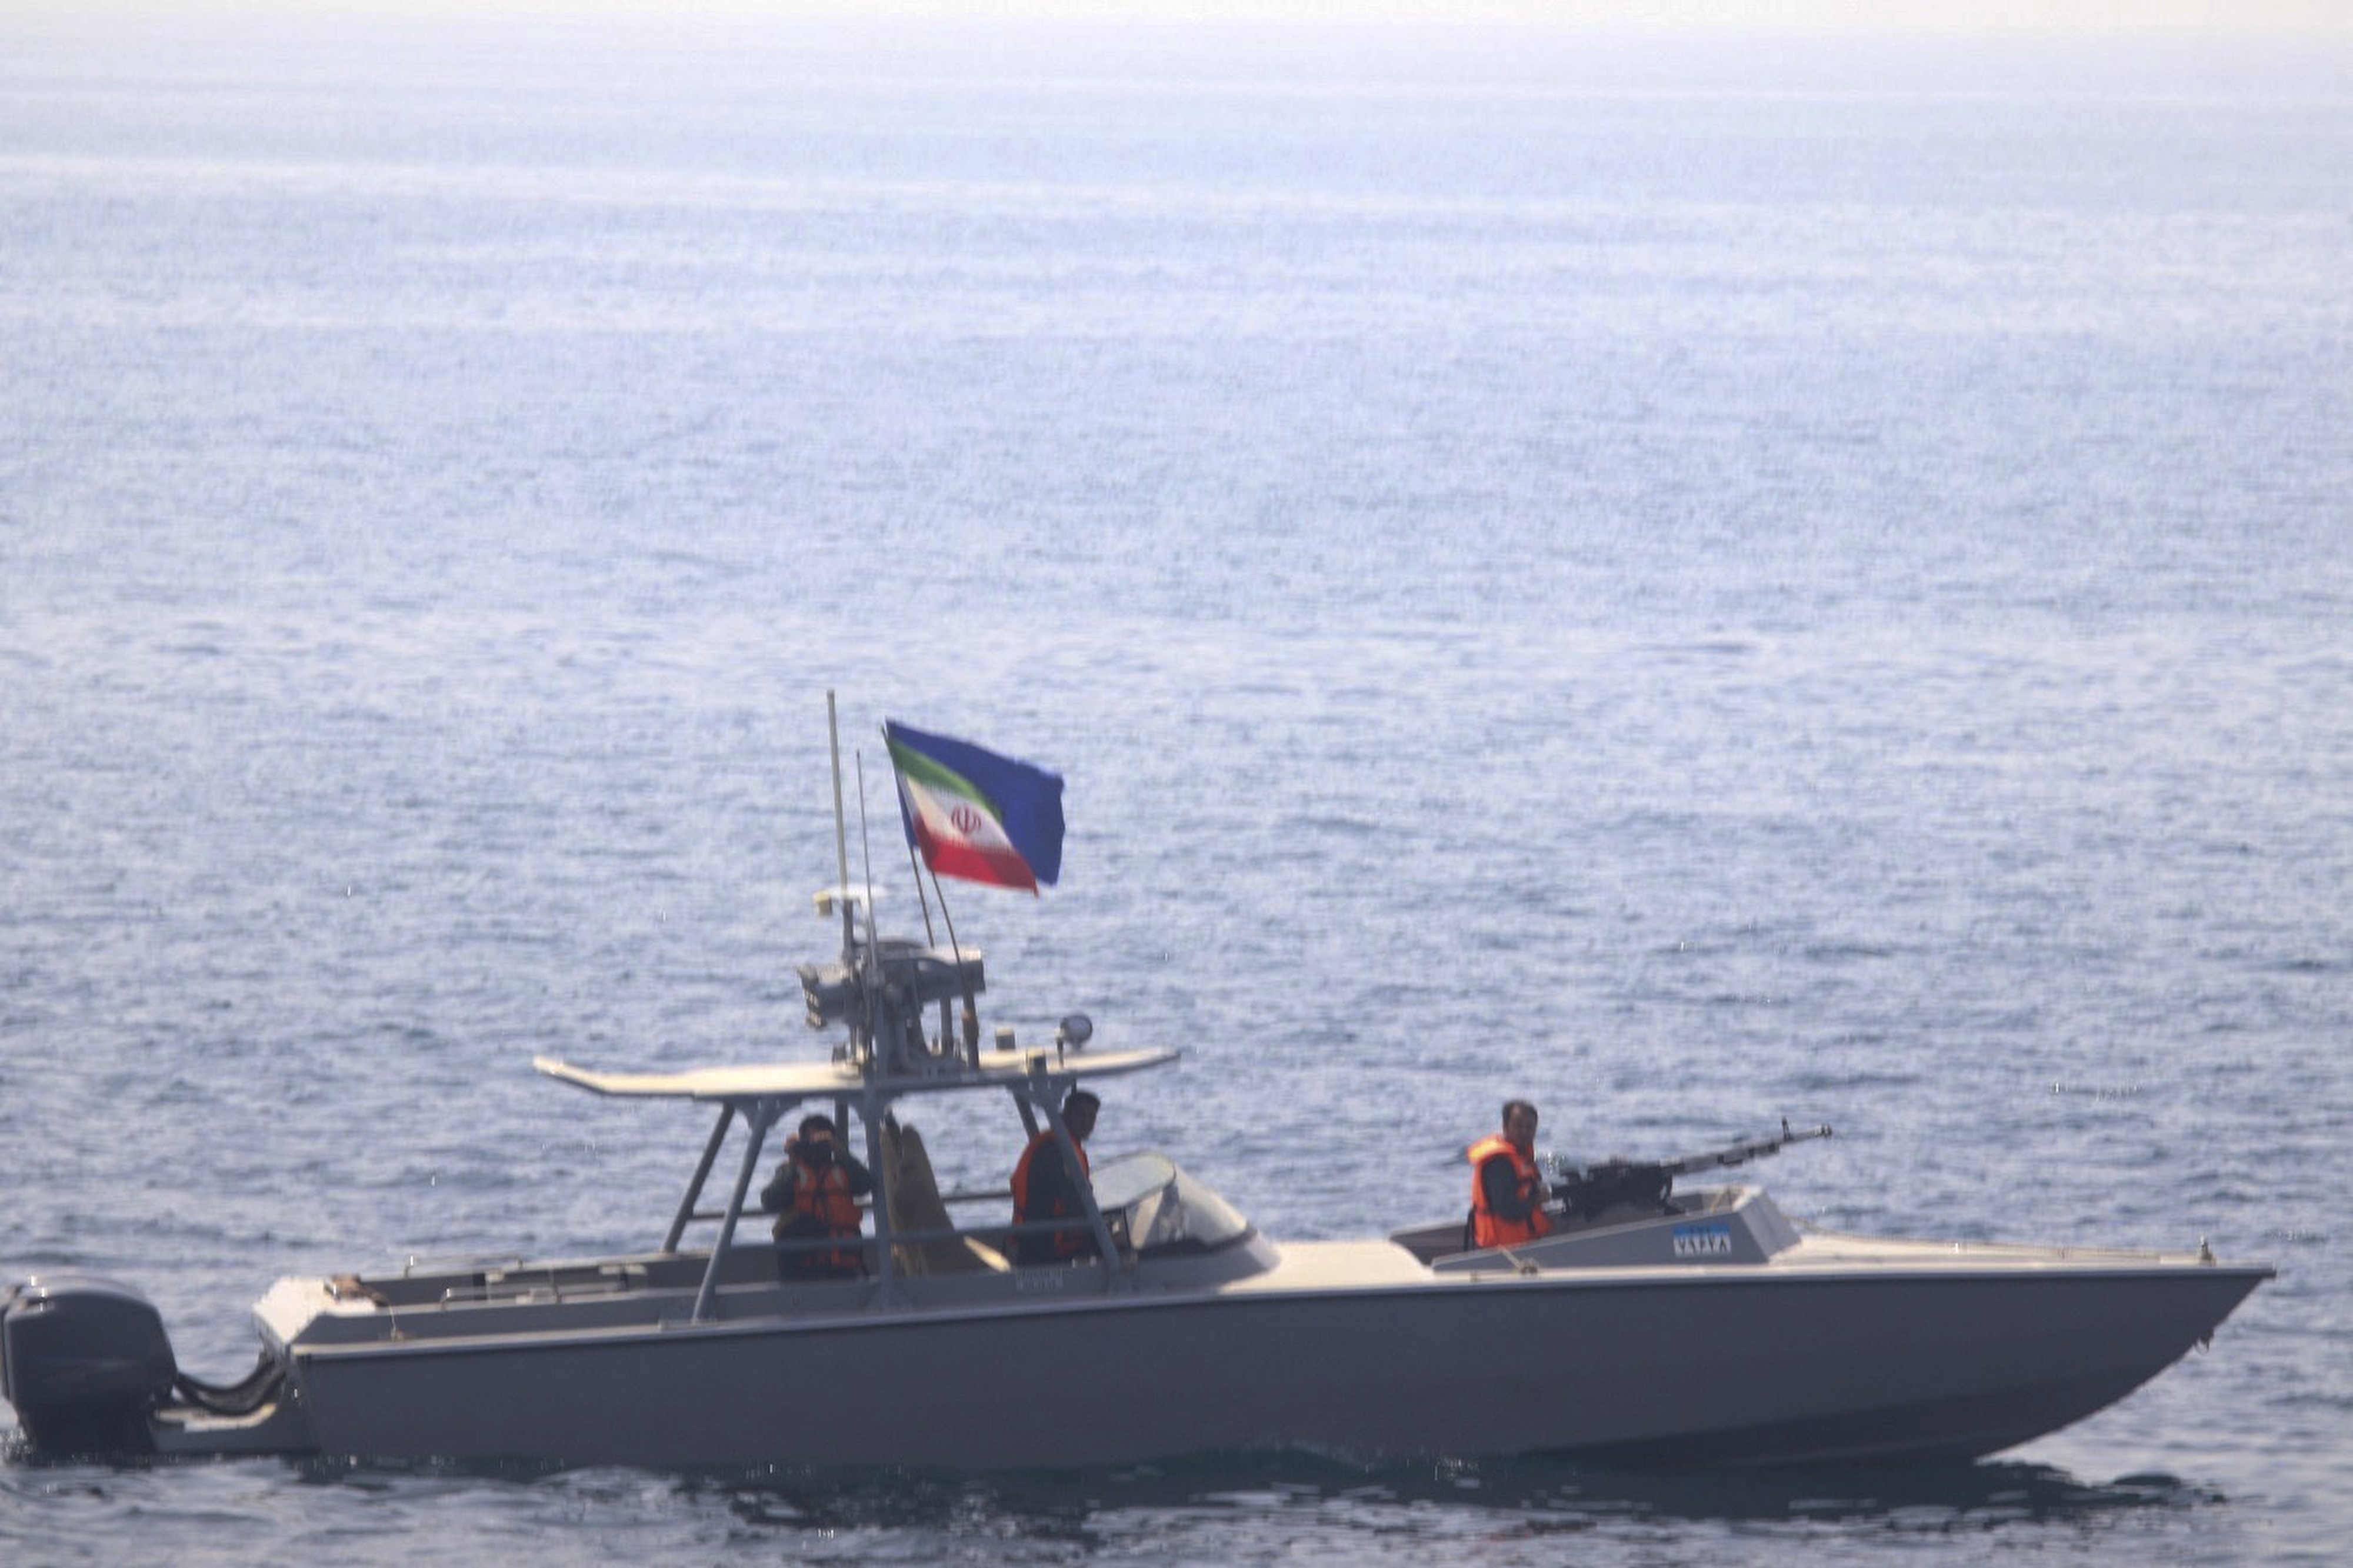 The Iranian boat